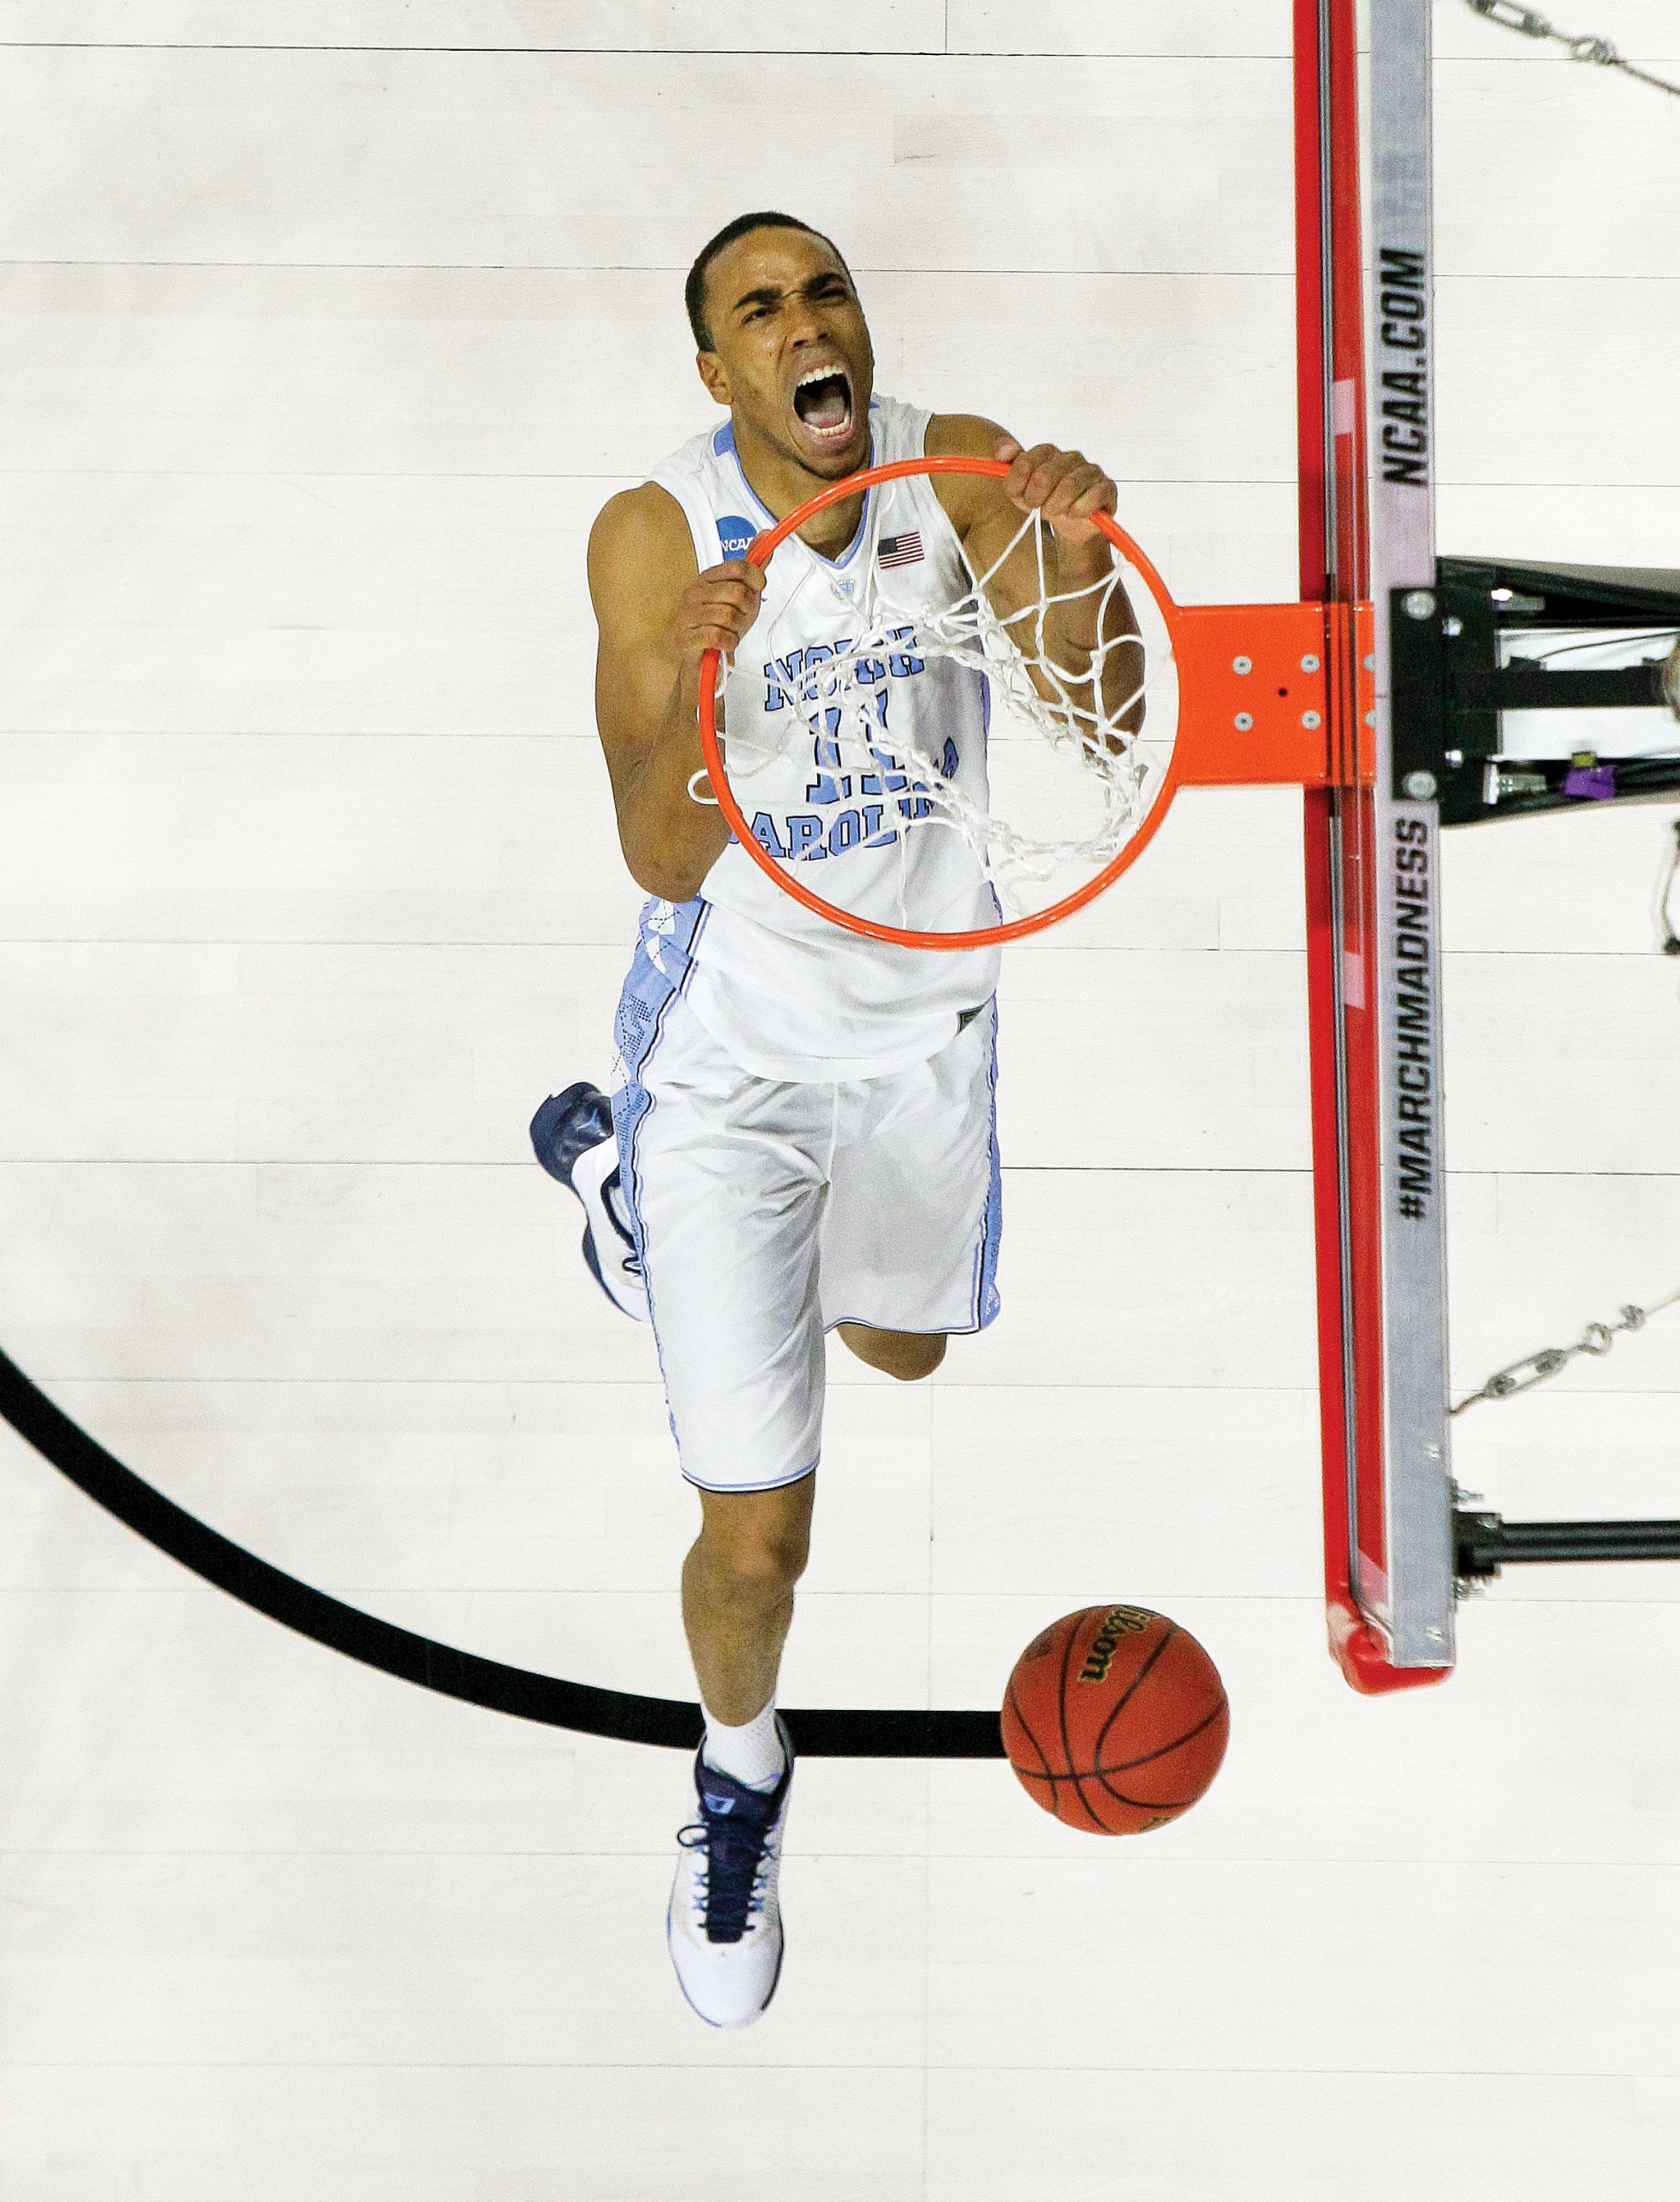 Brice Johnson dunking